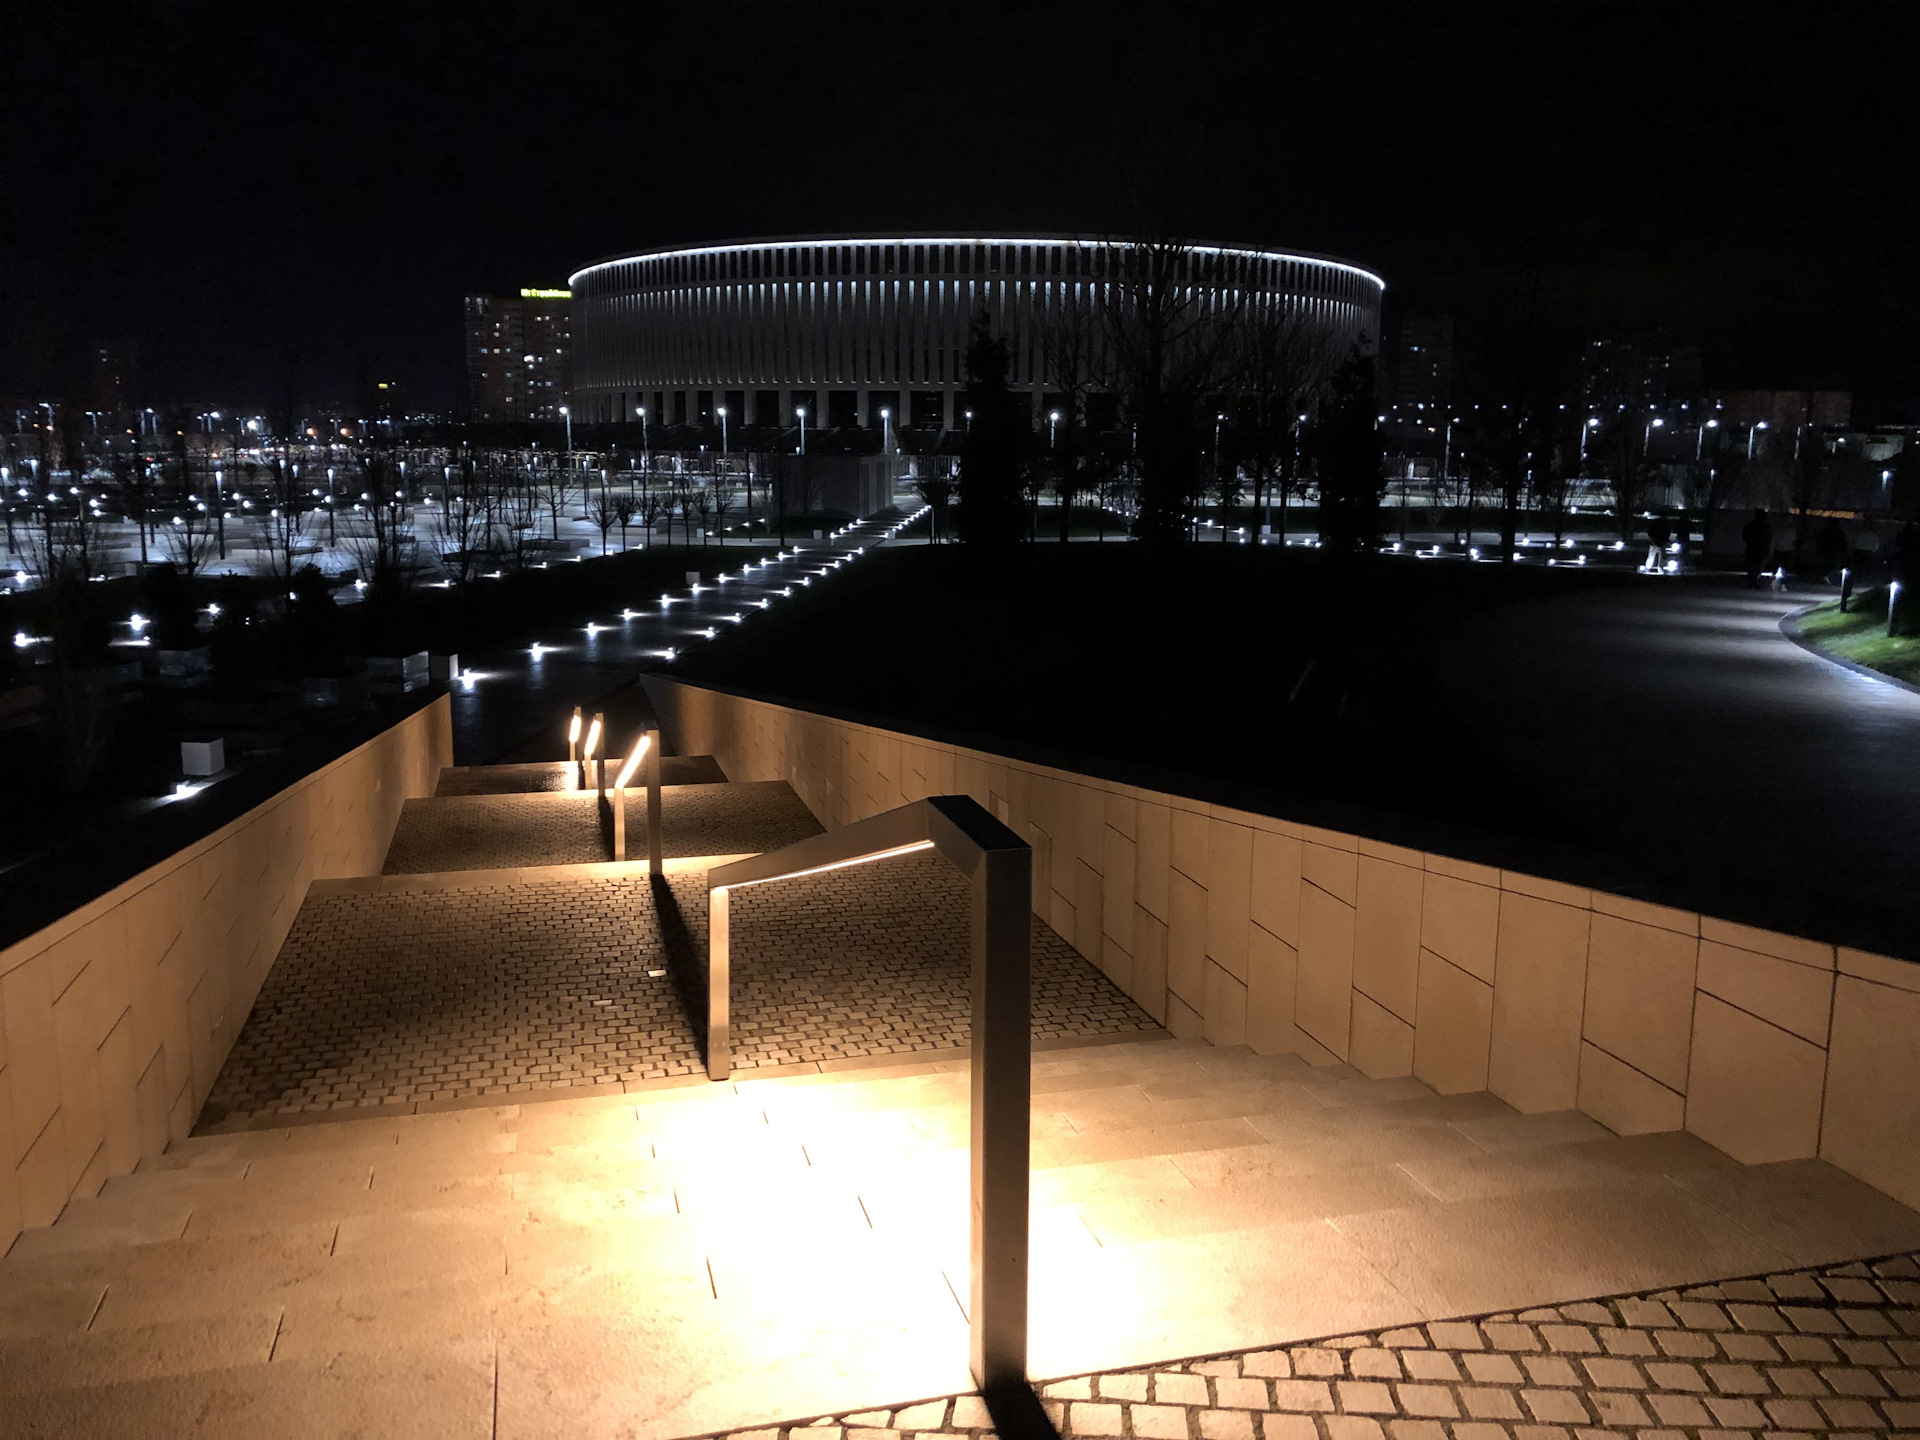 Ночной стадион Краснодар 2020